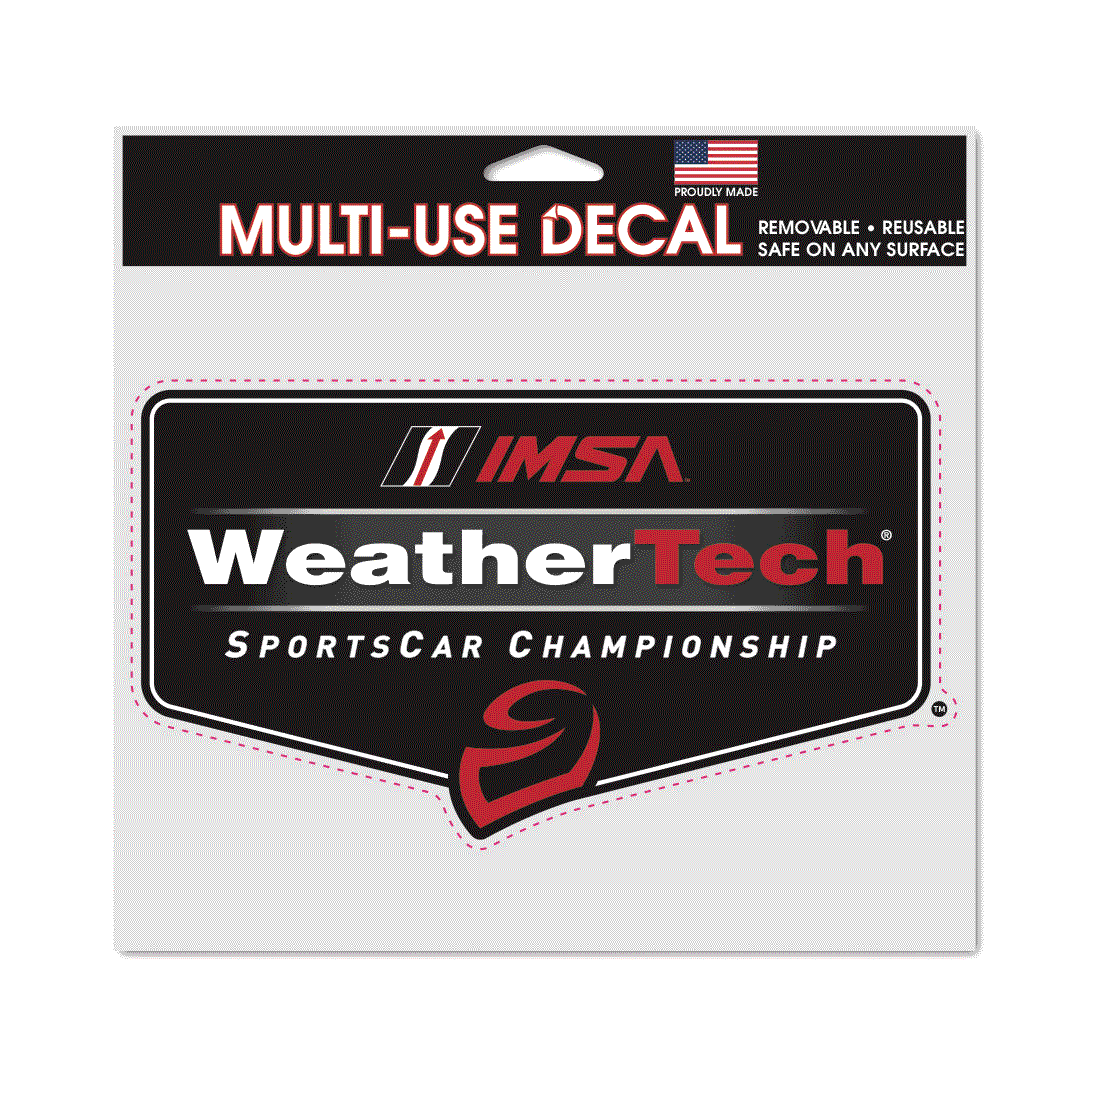 WeatherTech Series Multi-Use Decal